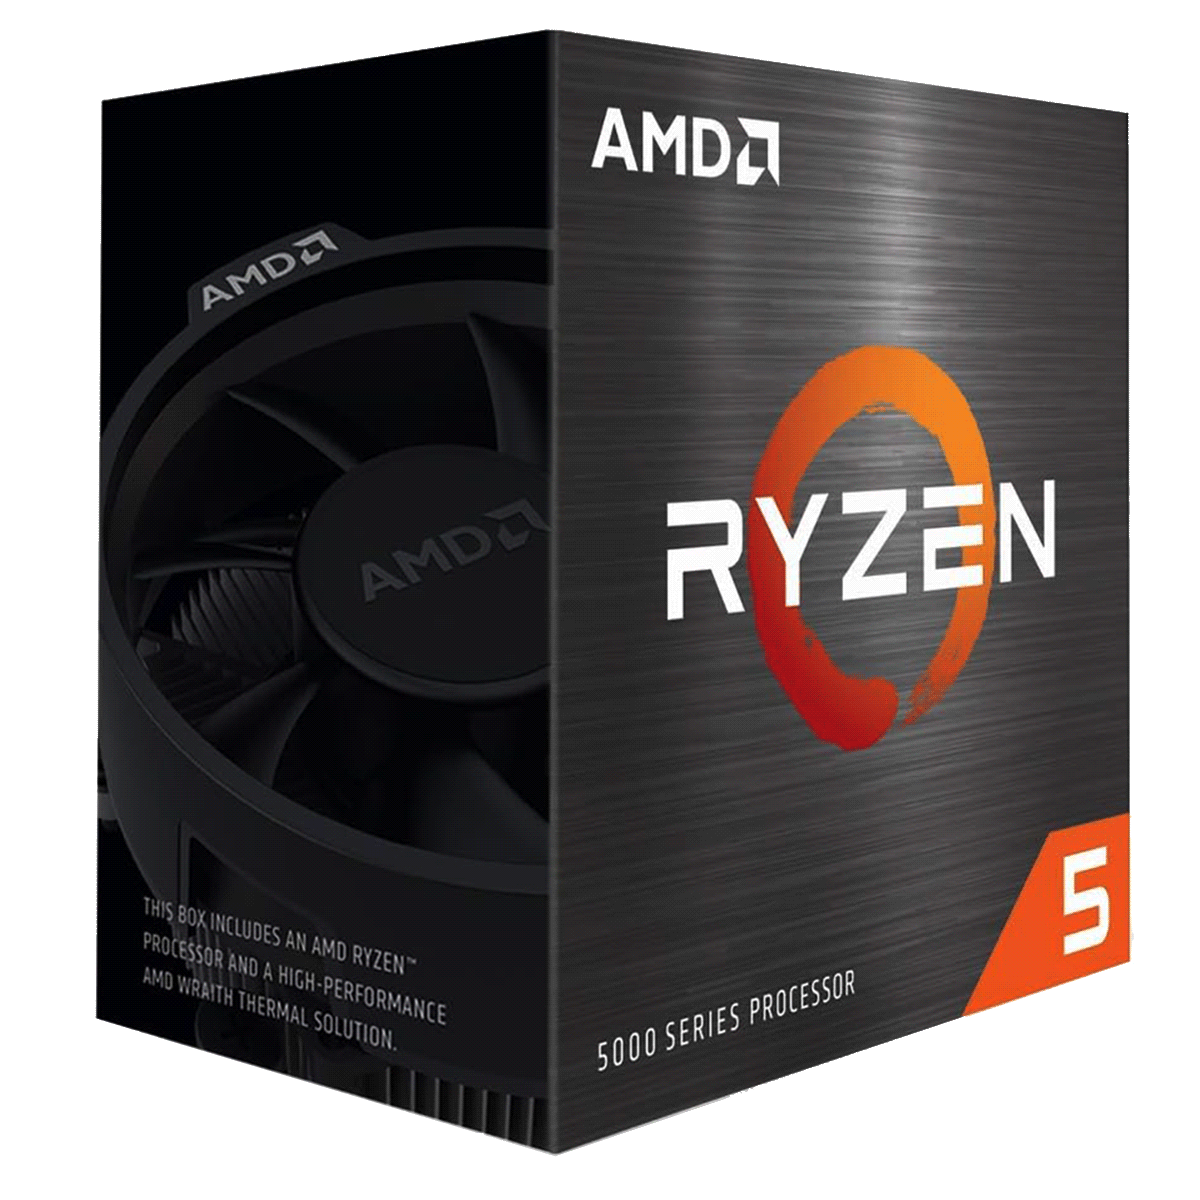 PC Bundle • AMD Ryzen 5 5600X • Asus Rog Strix B550-F Gaming • 16GB DDR4-3200 Ram Kit